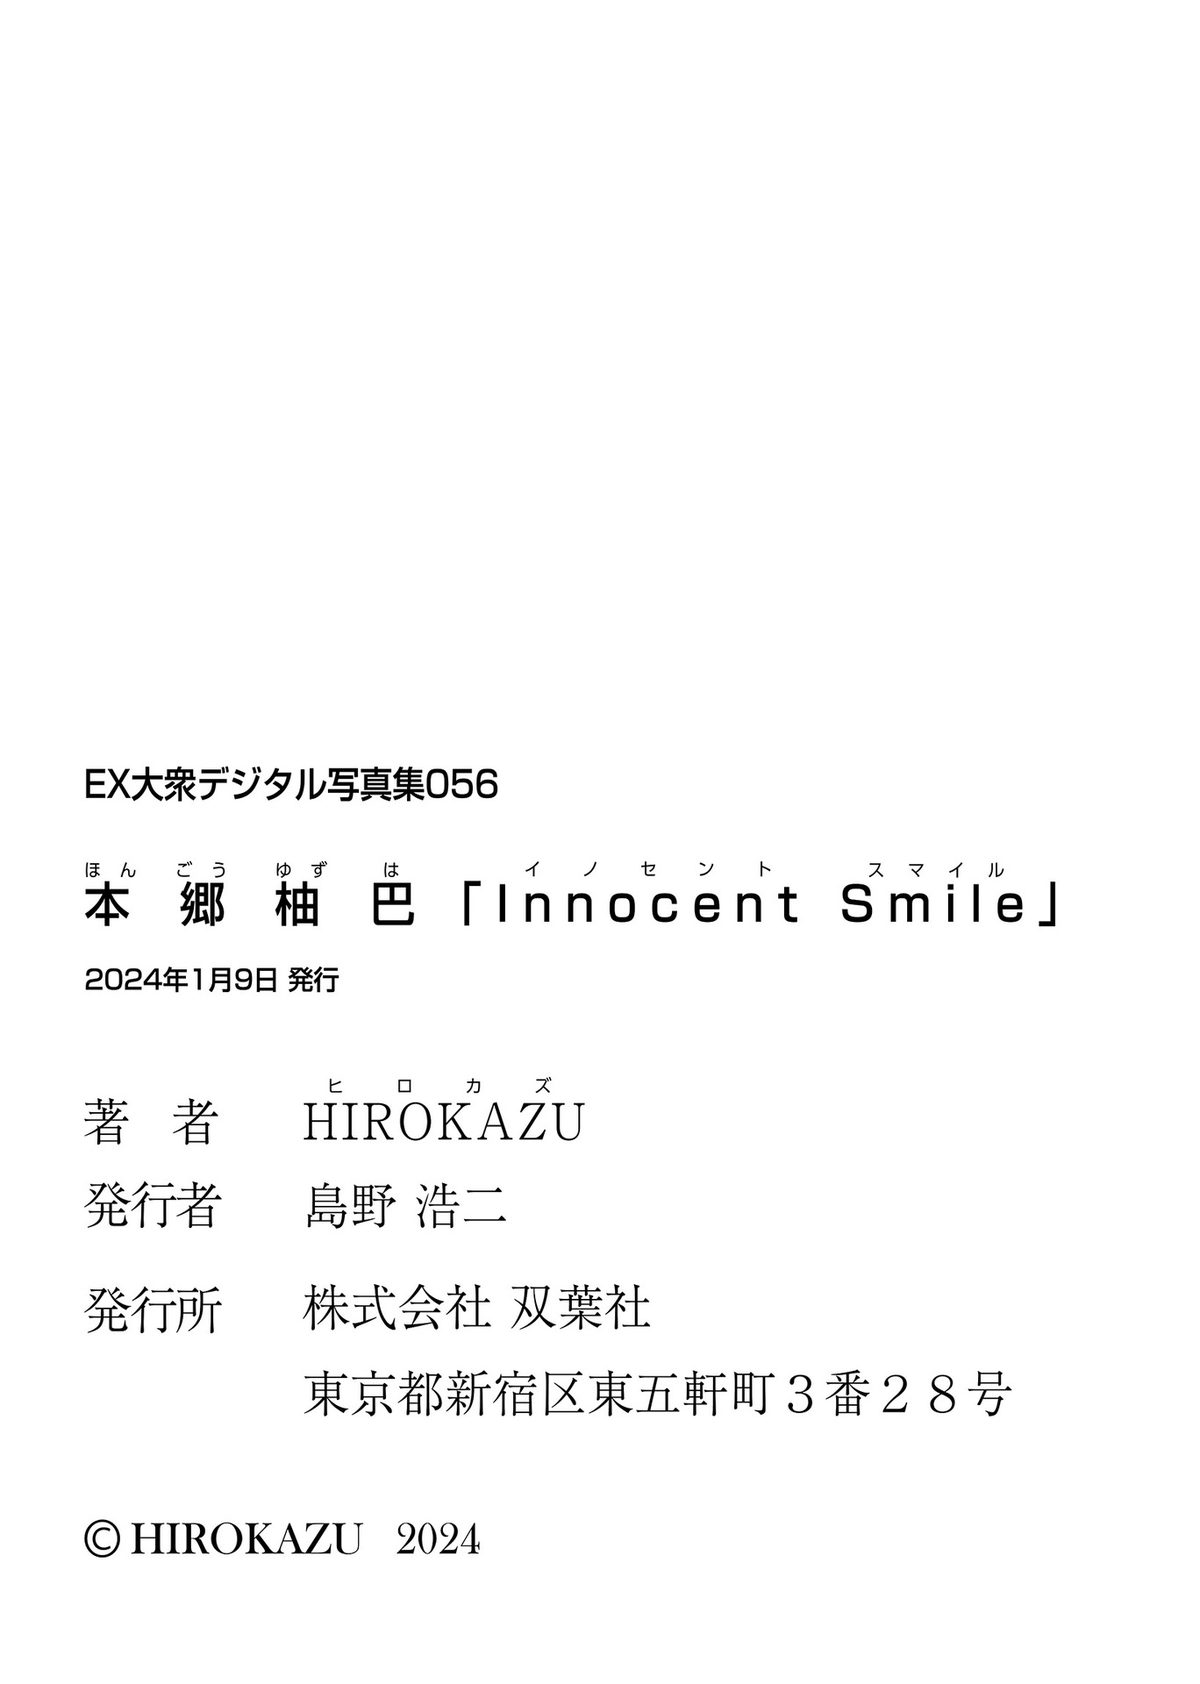 Hongo Yuzuha 本郷柚巴 Innocent Smile 0063 9200016650.jpg